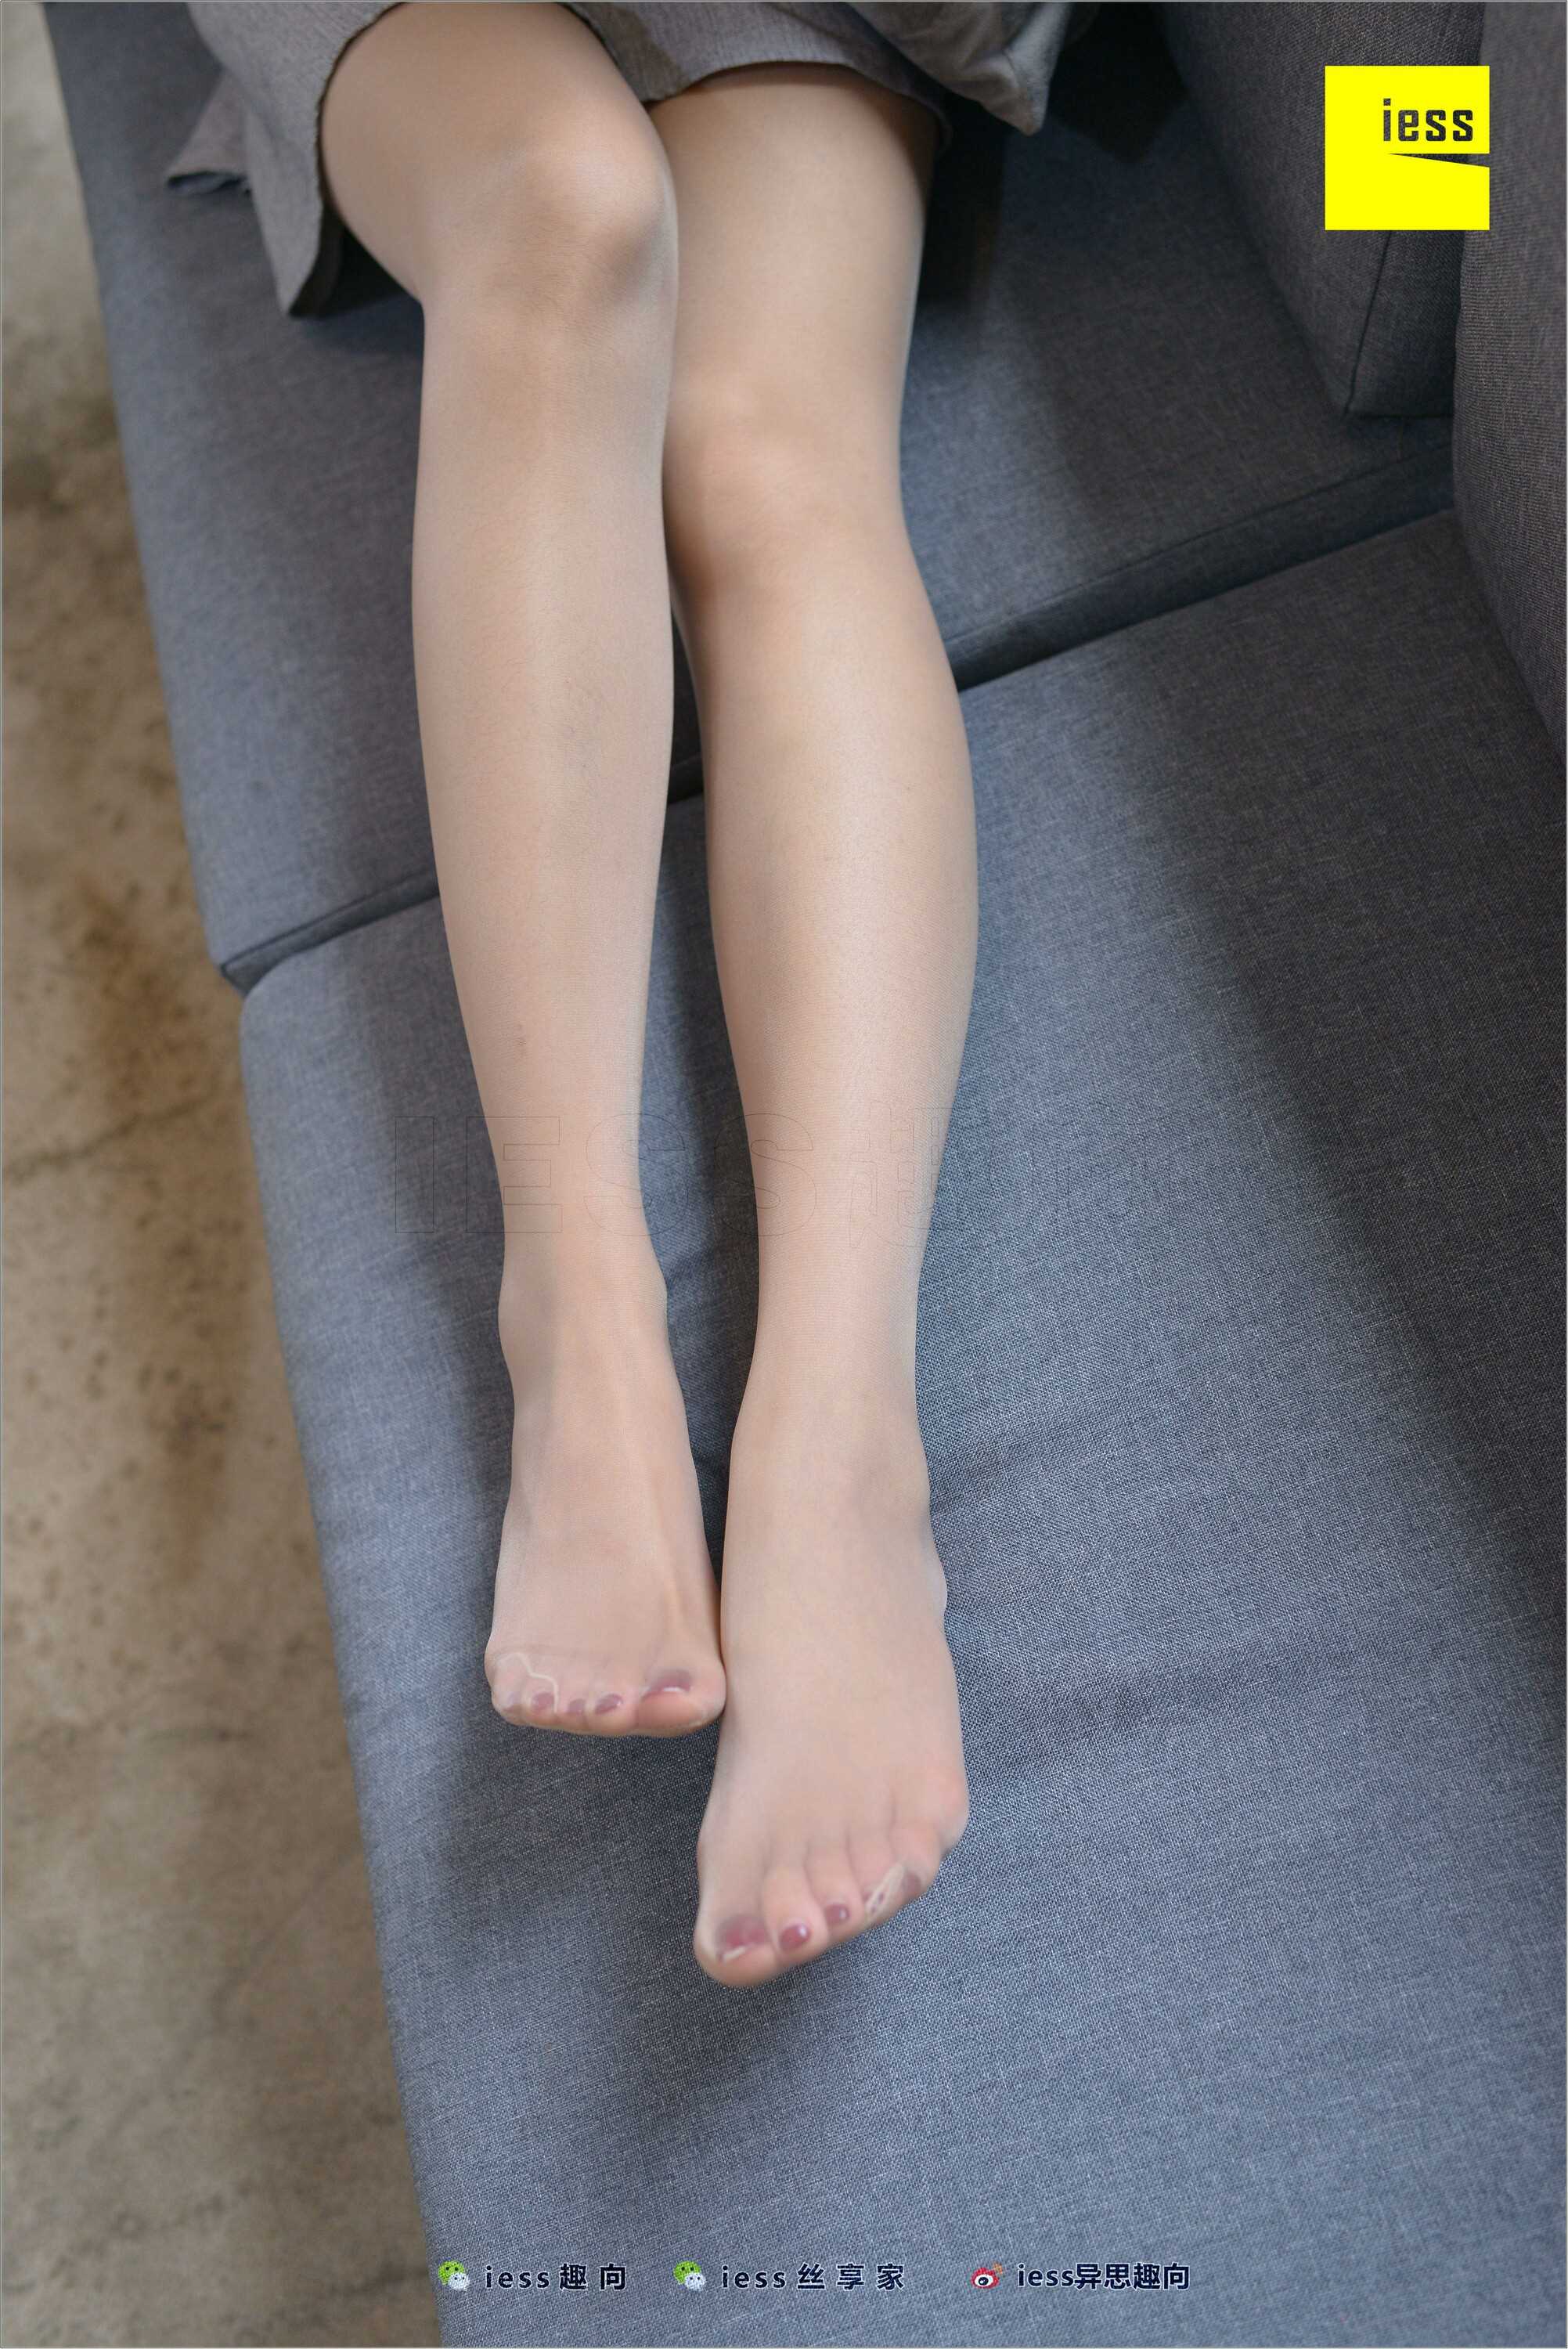 China Beauty Legs and feet 532